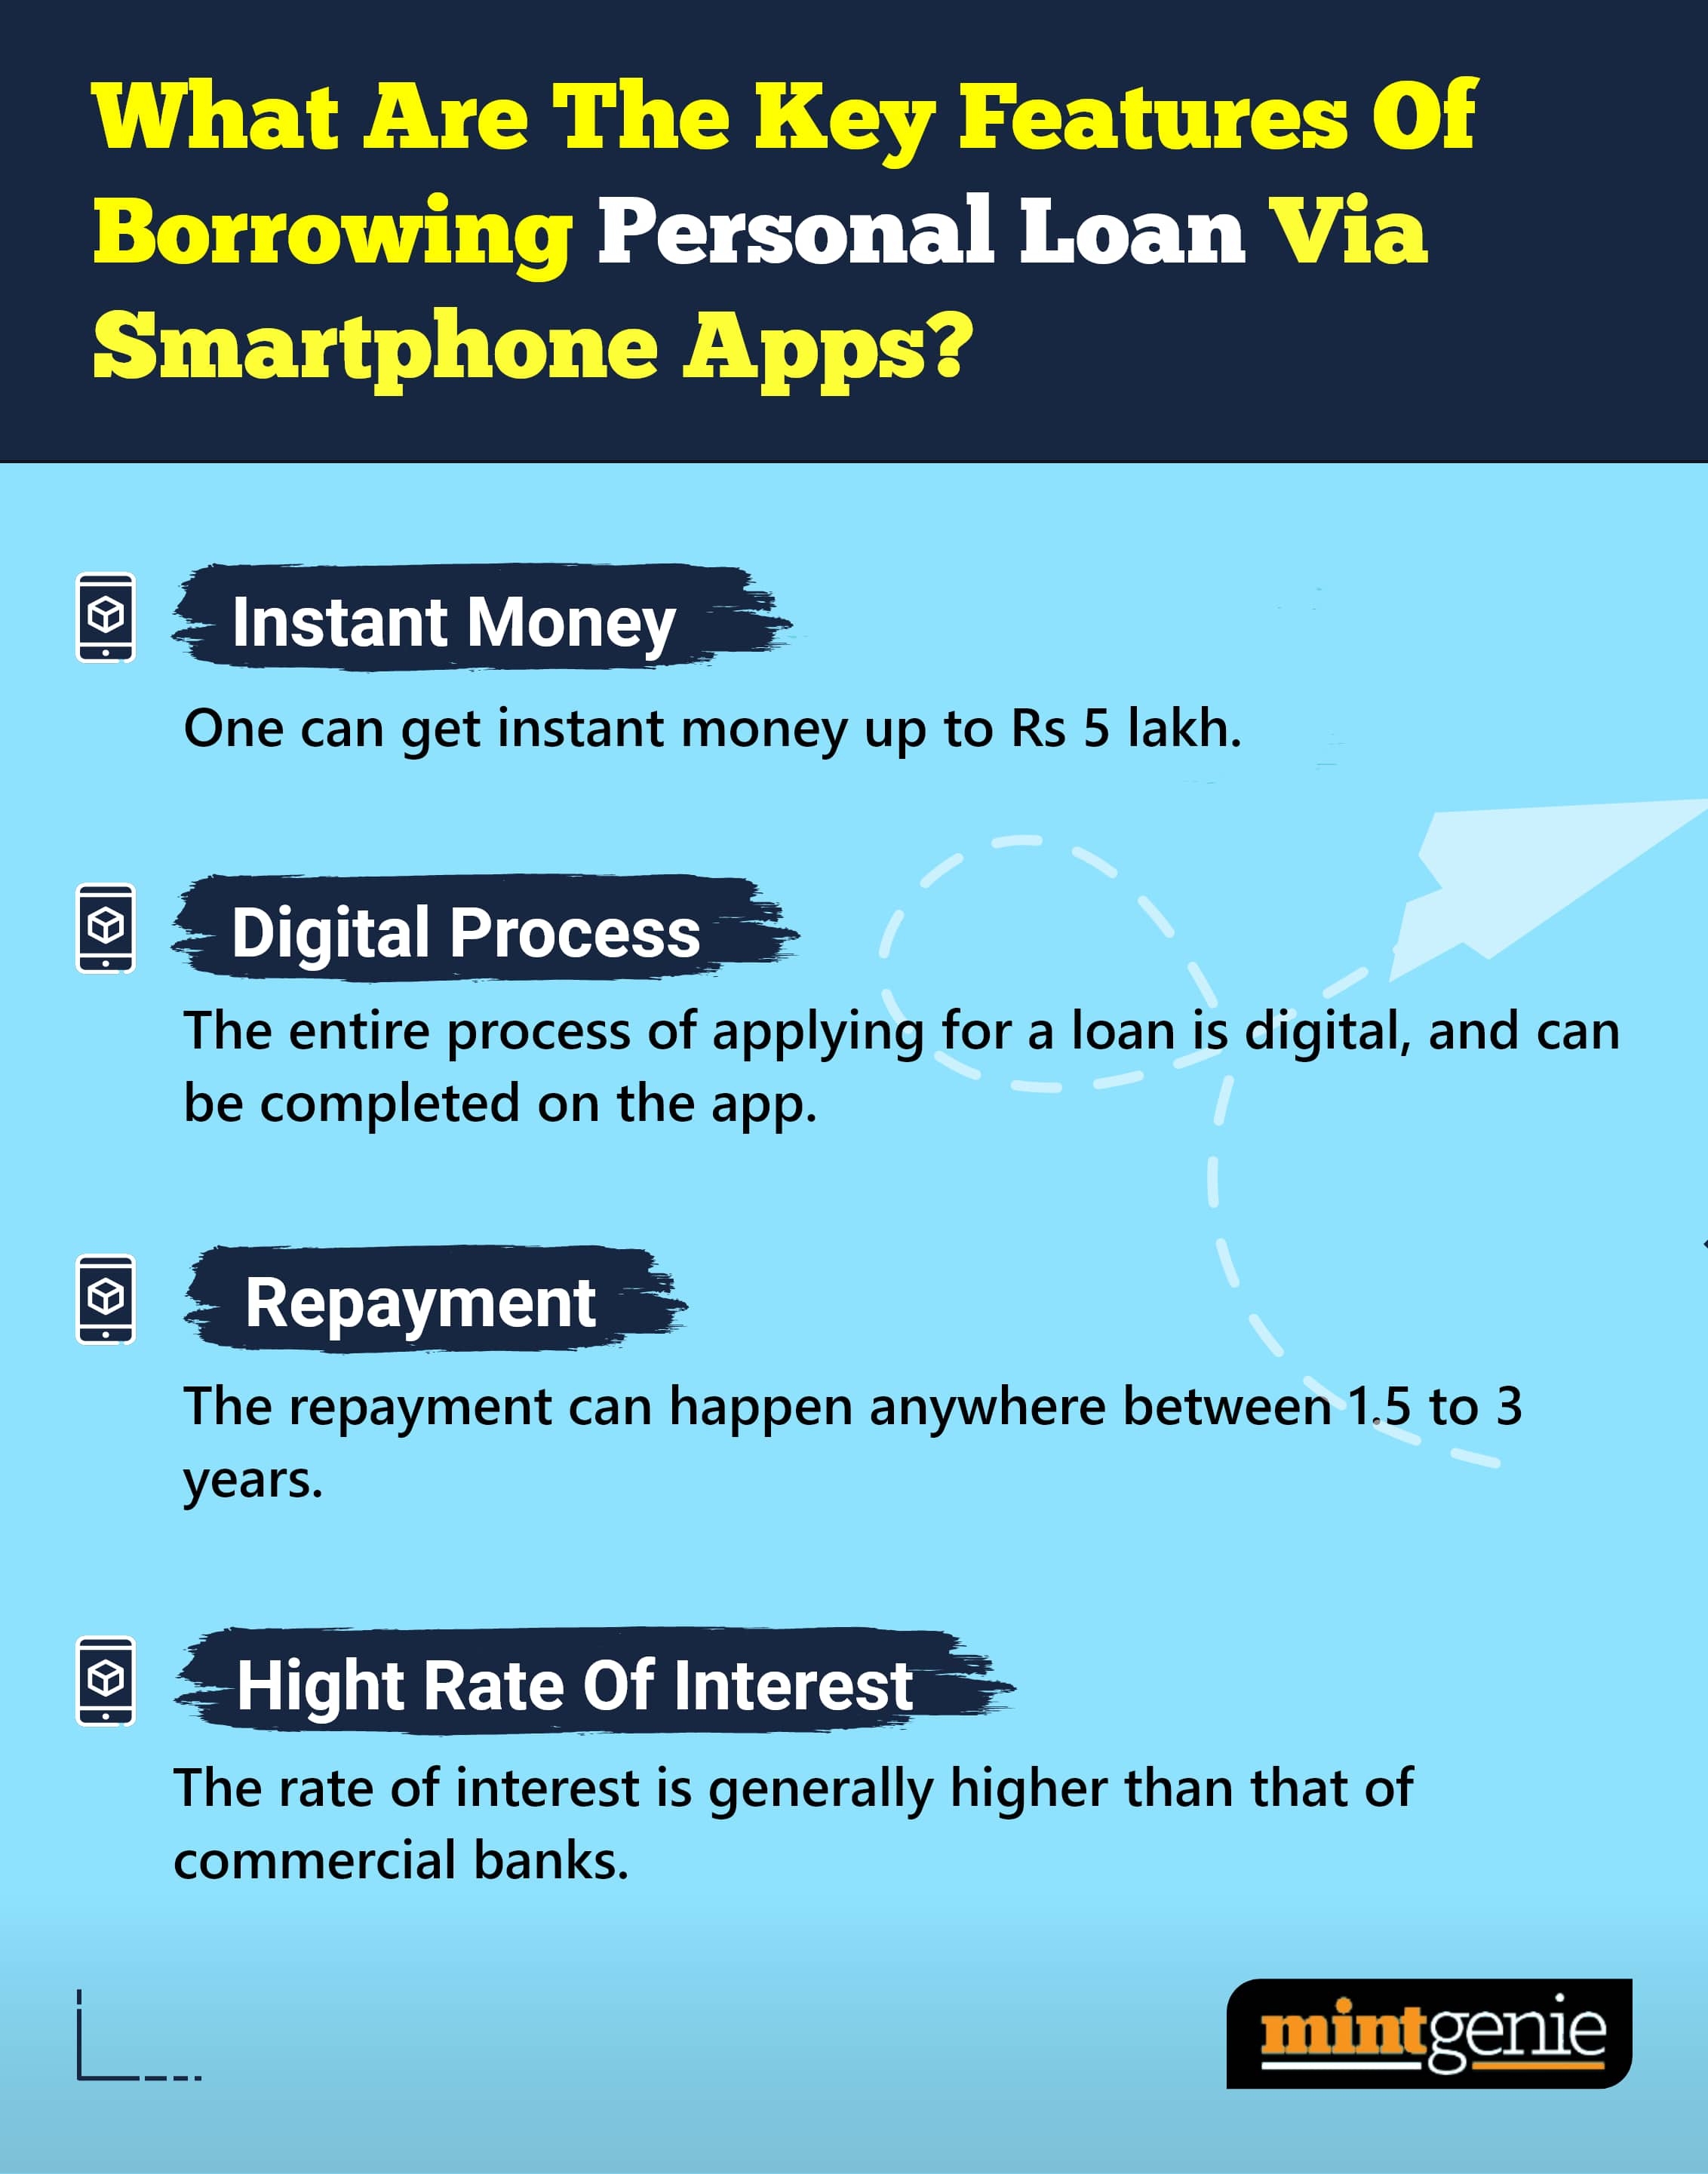 Borrowing money via mobile apps